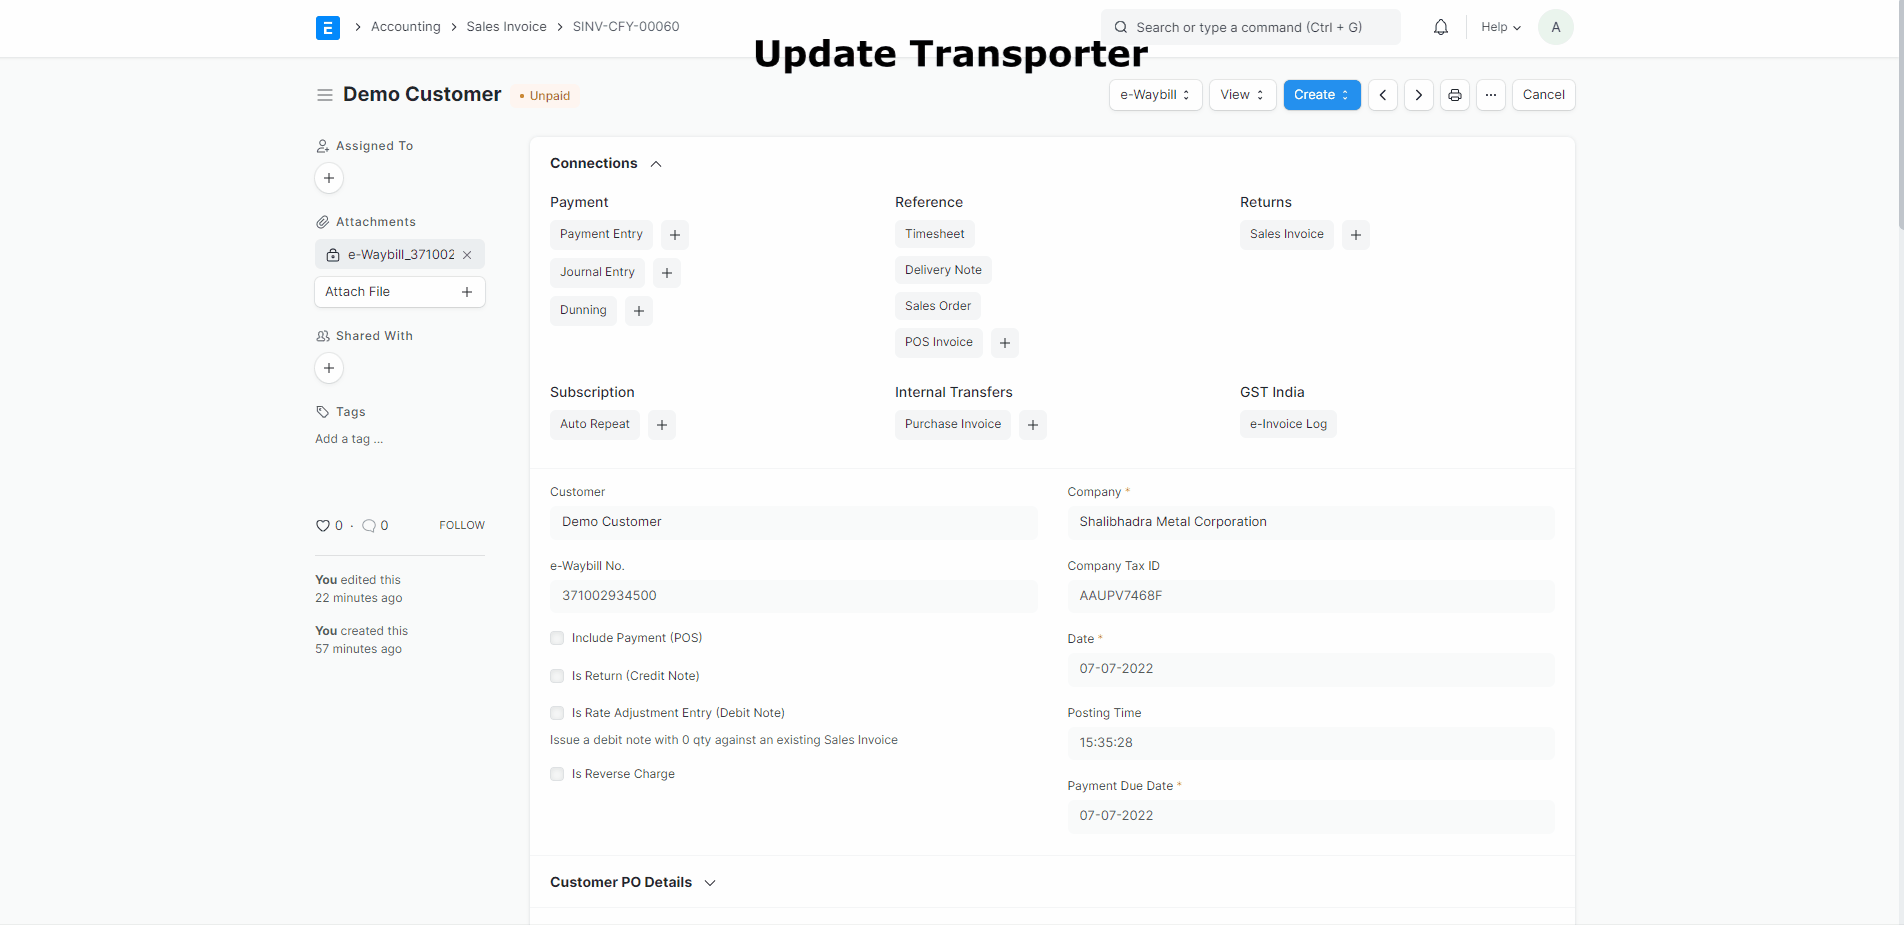 Update Transporter